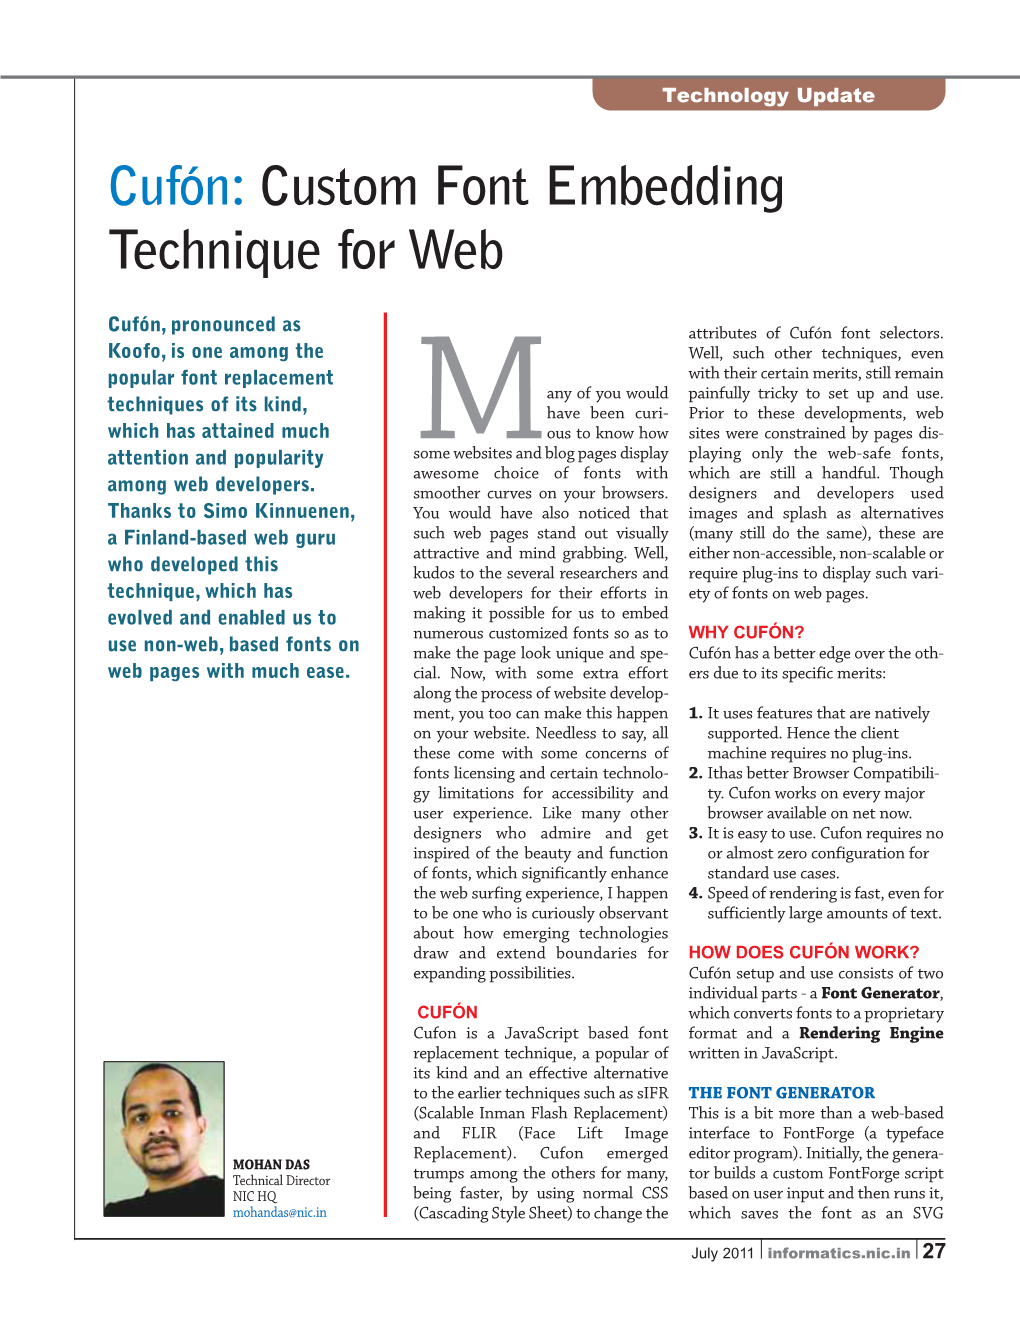 Cufón: Custom Font Embedding Technique for Web